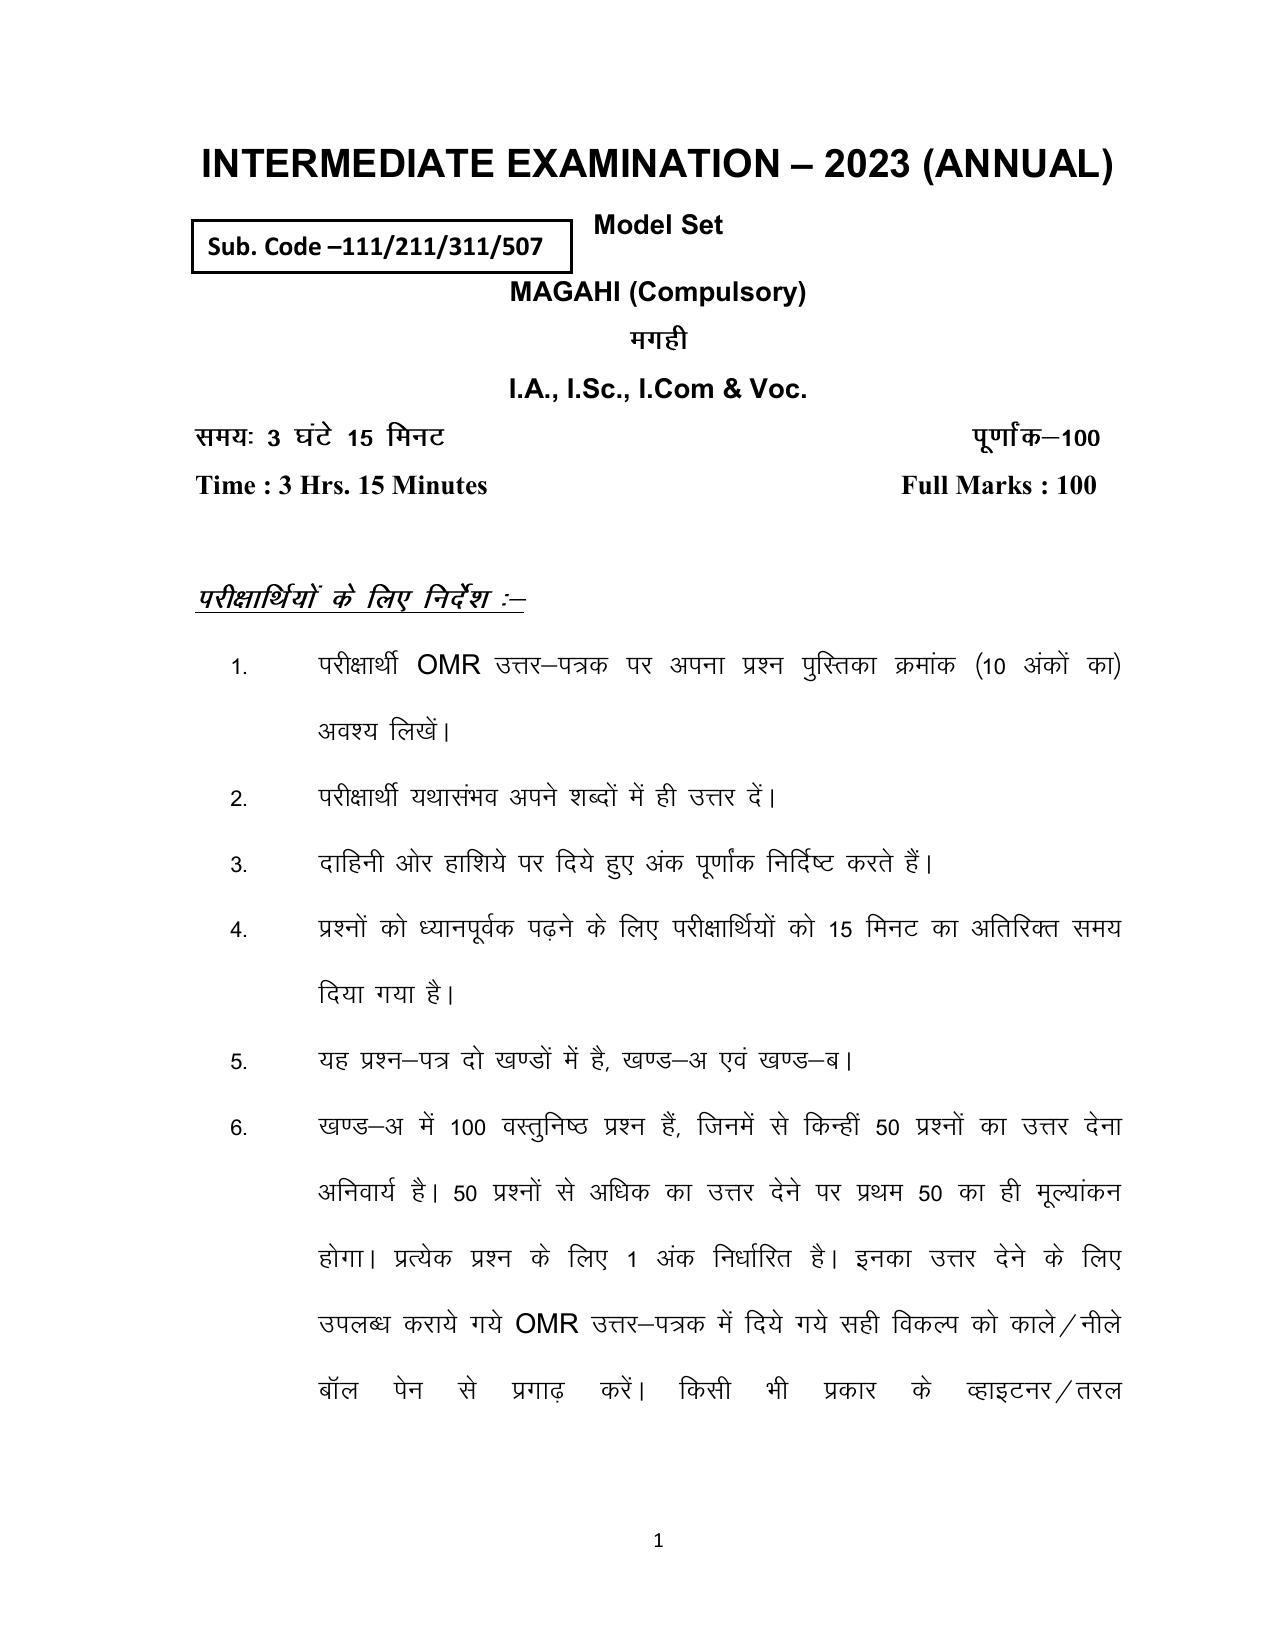 Bihar Board Class 12 Magahi Model Paper - Page 1